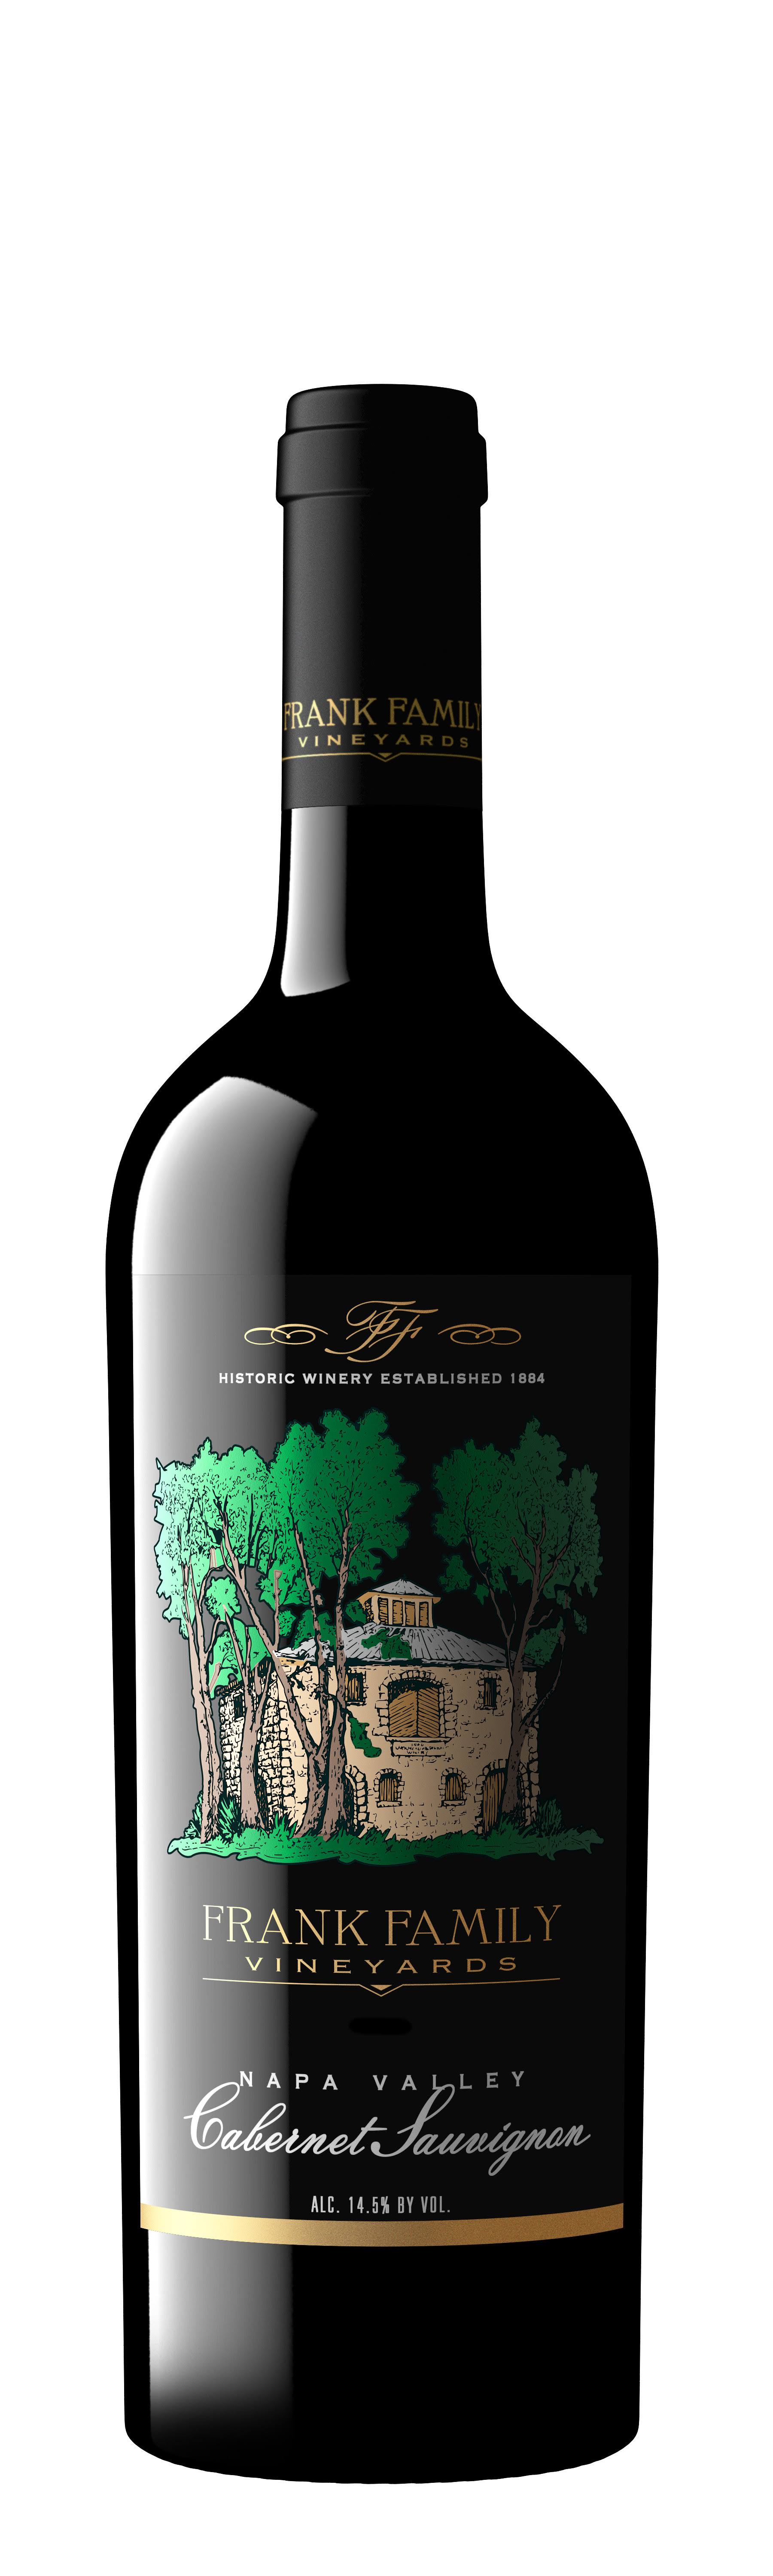 Frank Family Vineyards Cabernet Sauvignon - Napa Valley